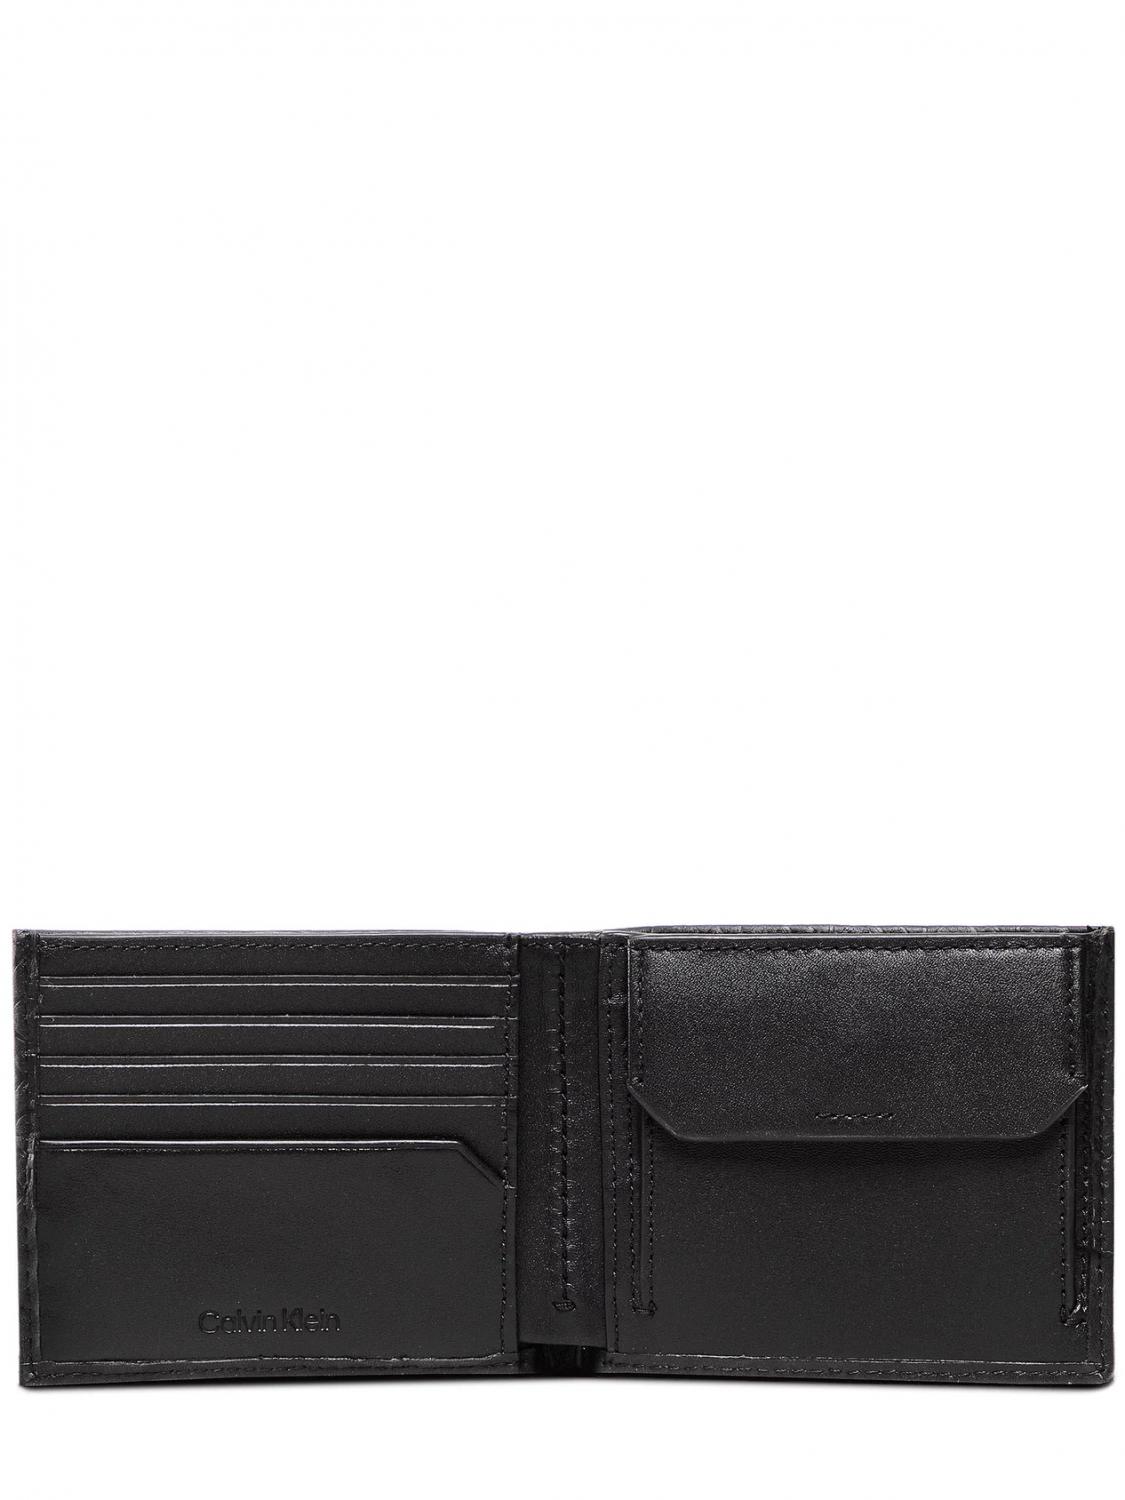 Calvin Klein Subtle Mono Leather Wallet Black / White - Buy At Outlet  Prices!